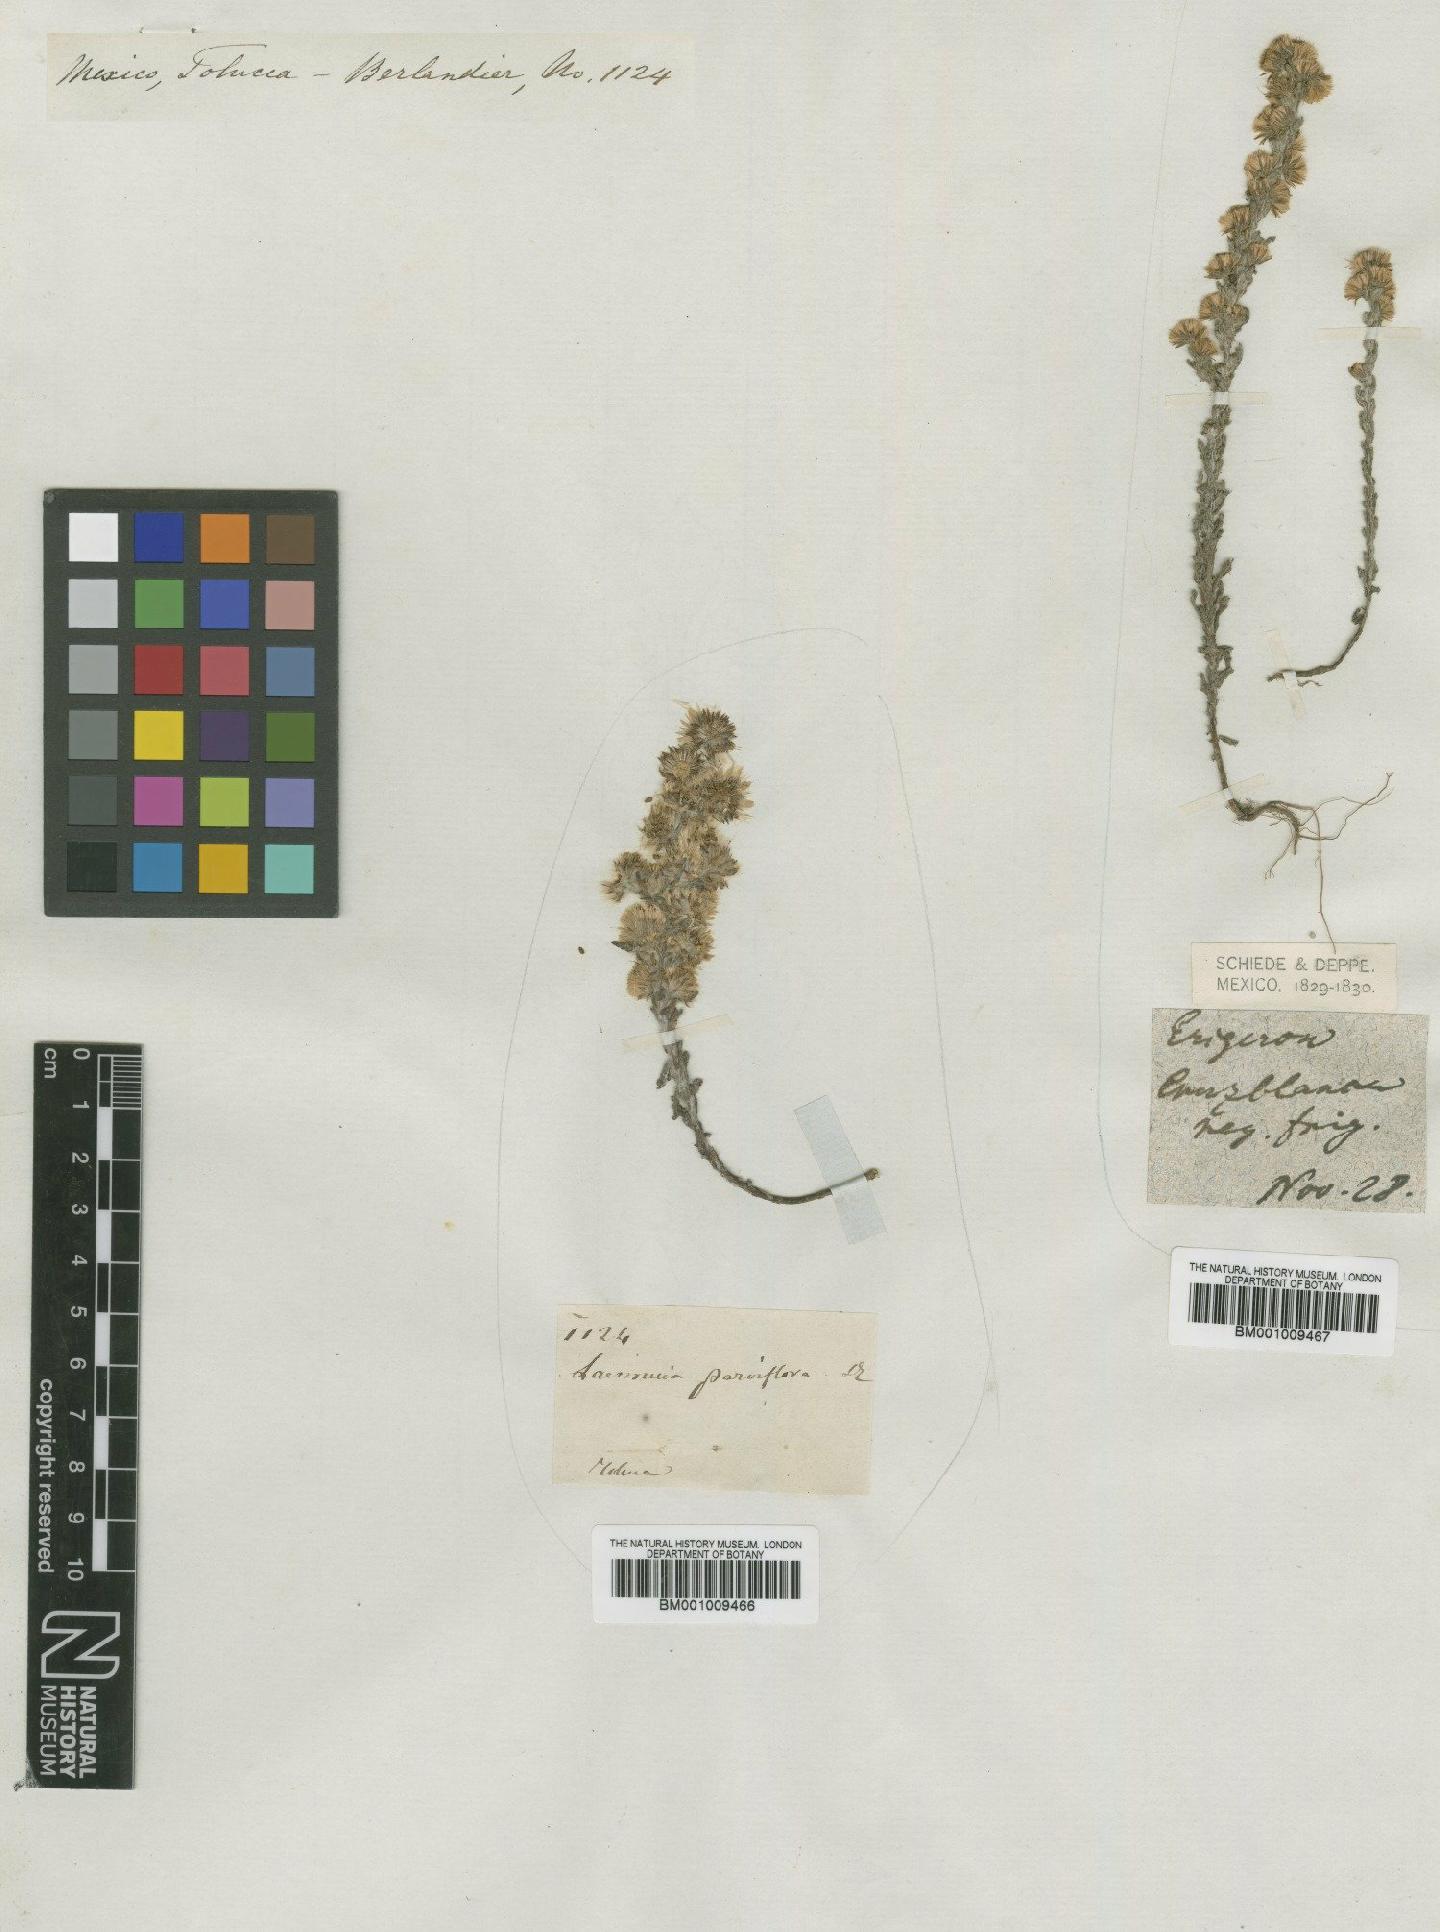 To NHMUK collection (Conyza parvifolia Wall.; TYPE; NHMUK:ecatalogue:610918)